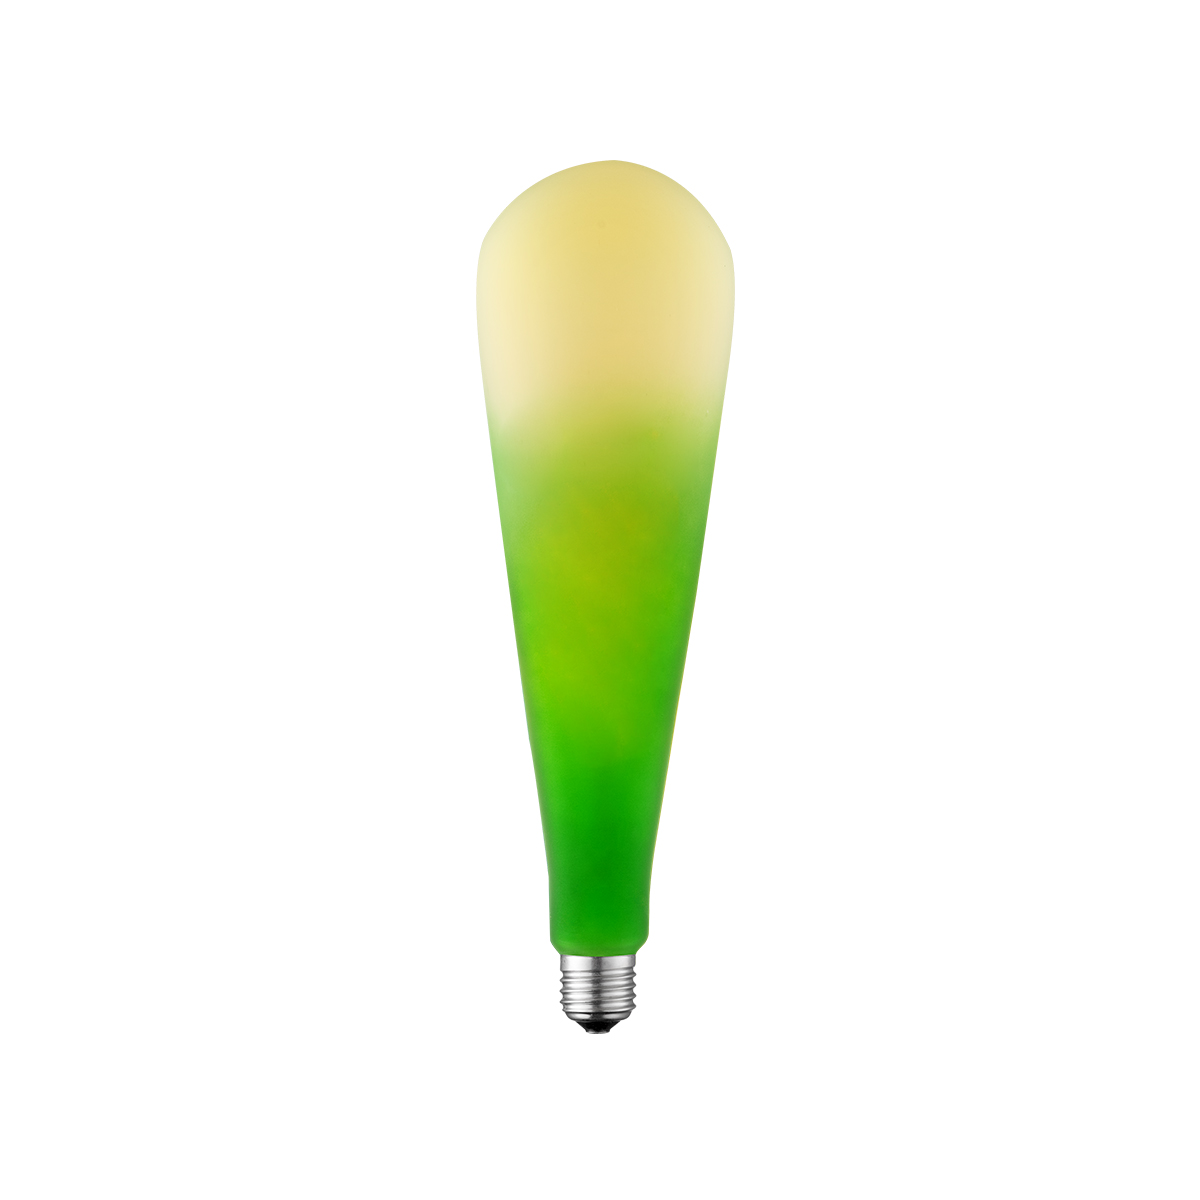 Tangla lighting - TLB-9002-04O - LED Light Bulb Single Spiral filament - 4W gradient green opal - standard - non dimmable - E27